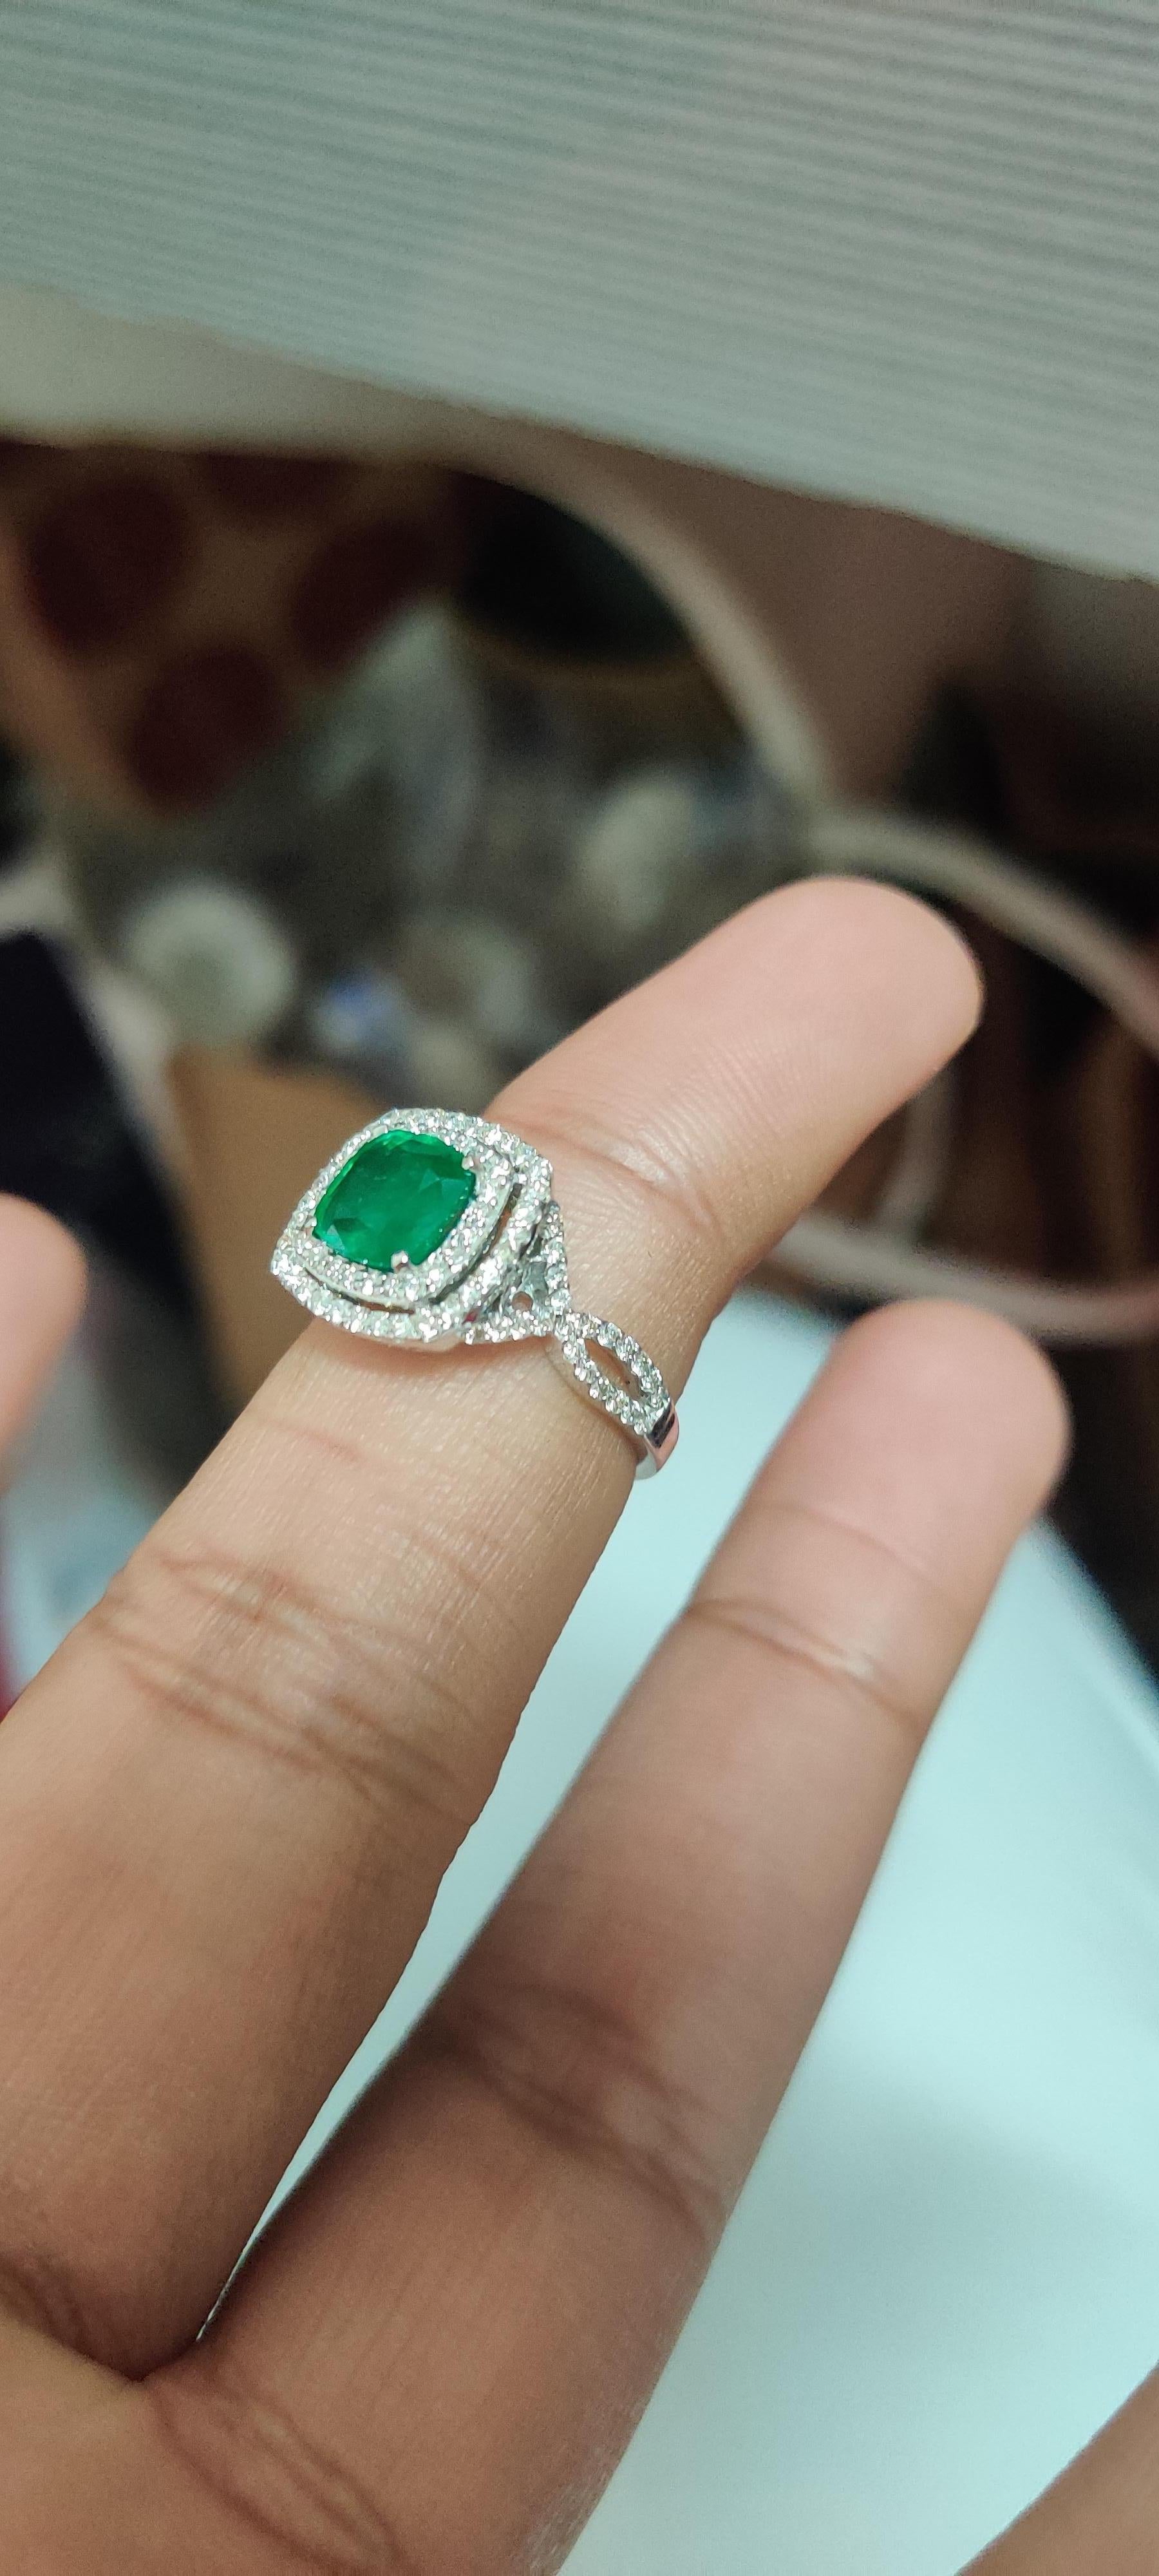 1.26 Carat Emerald with Halo Diamonds 18K White Gold Ring 2